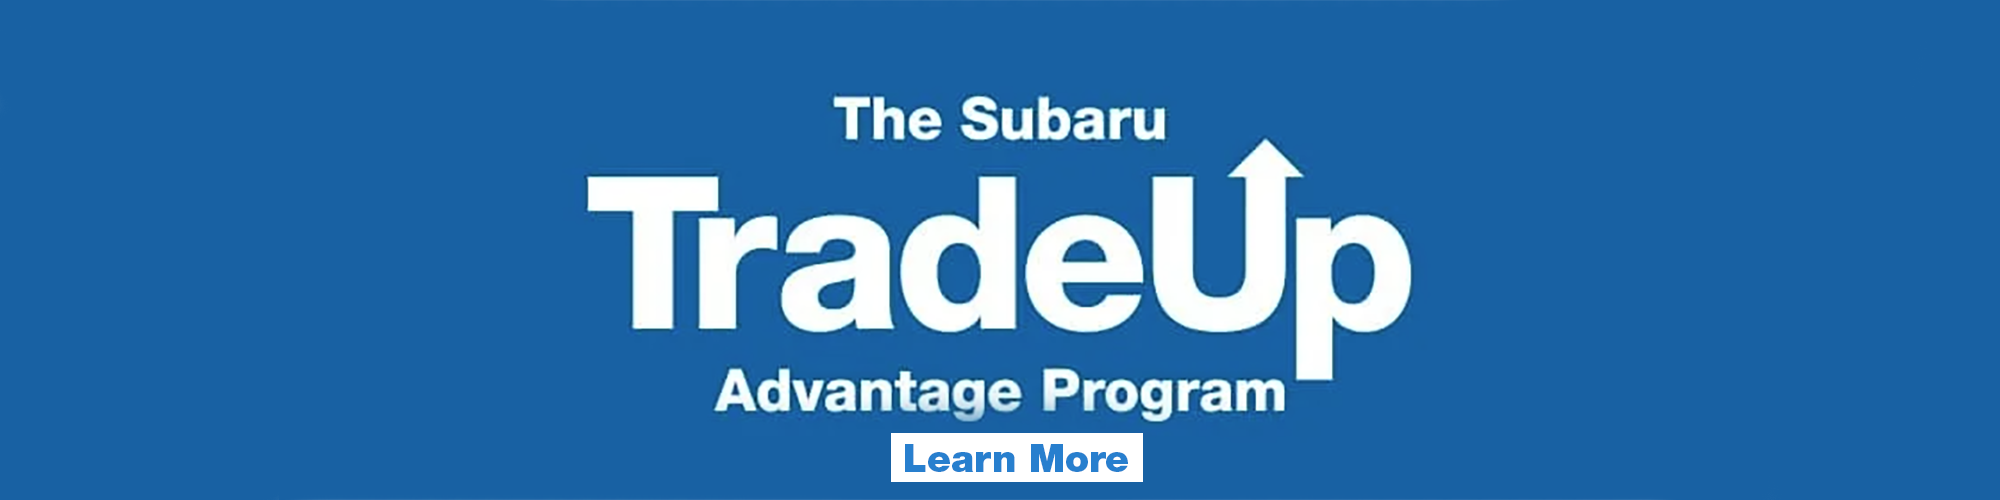 Subaru TradeUp Advantage Program